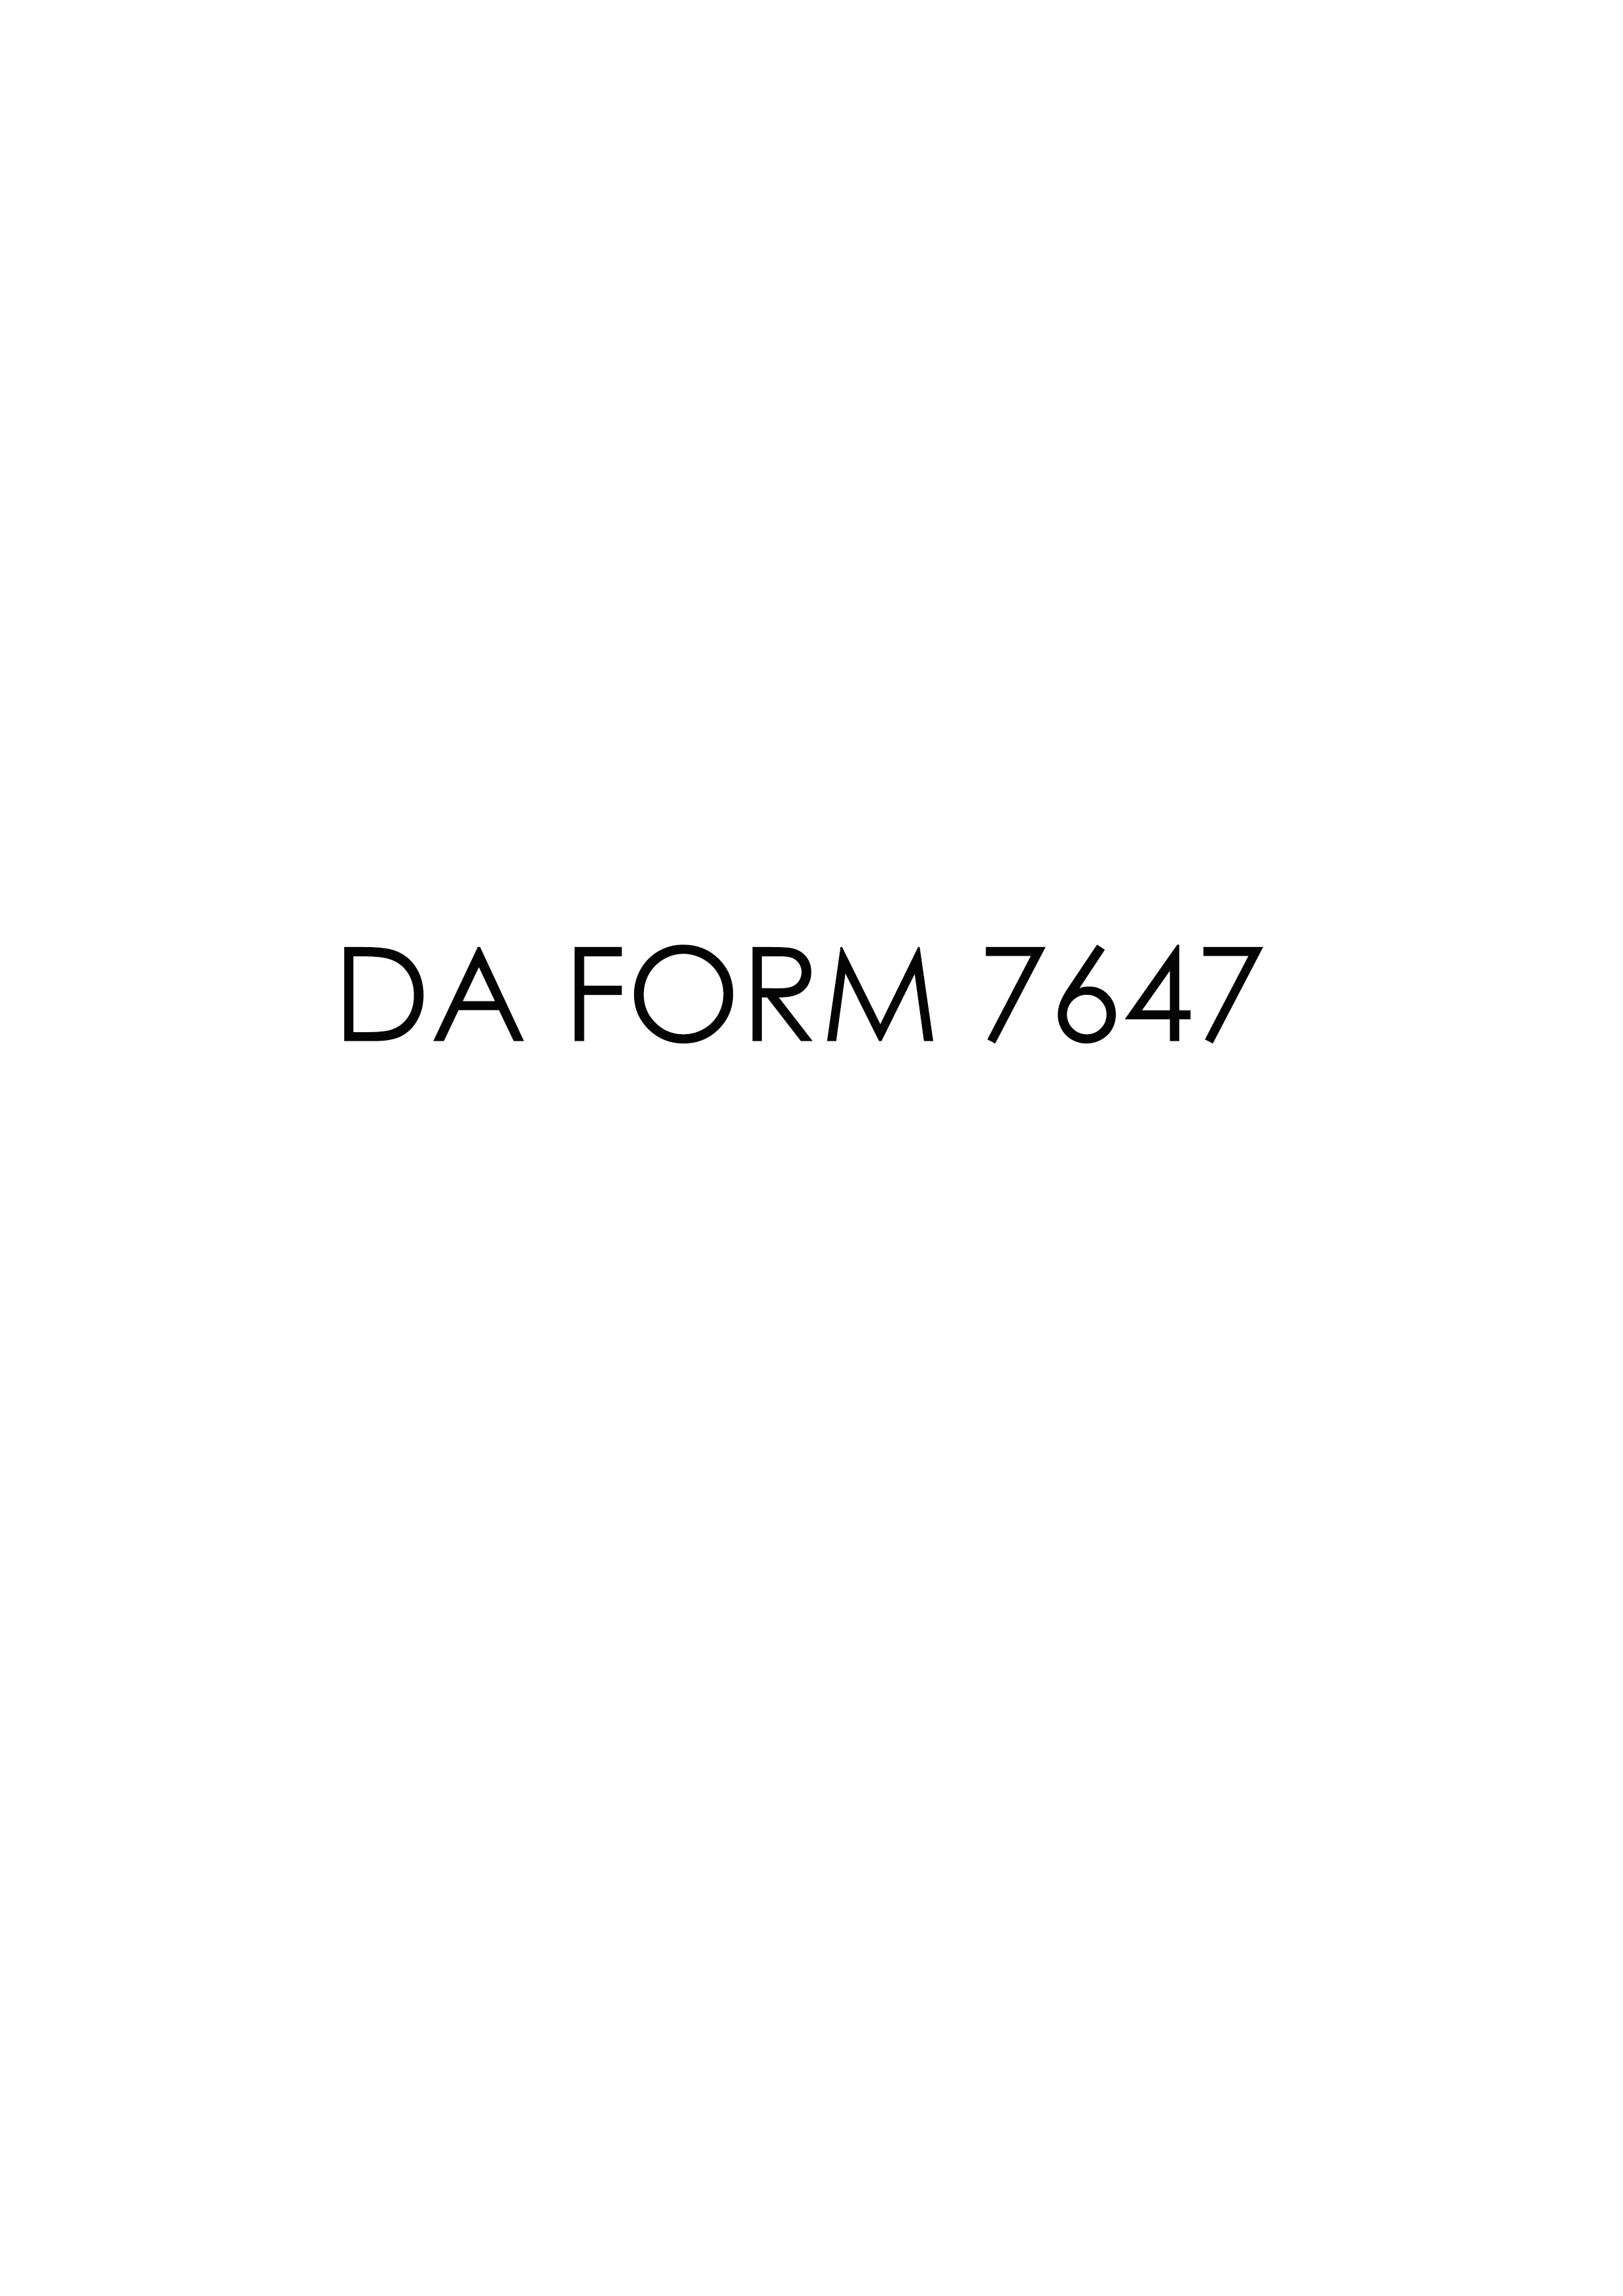 Download da 7647 Form